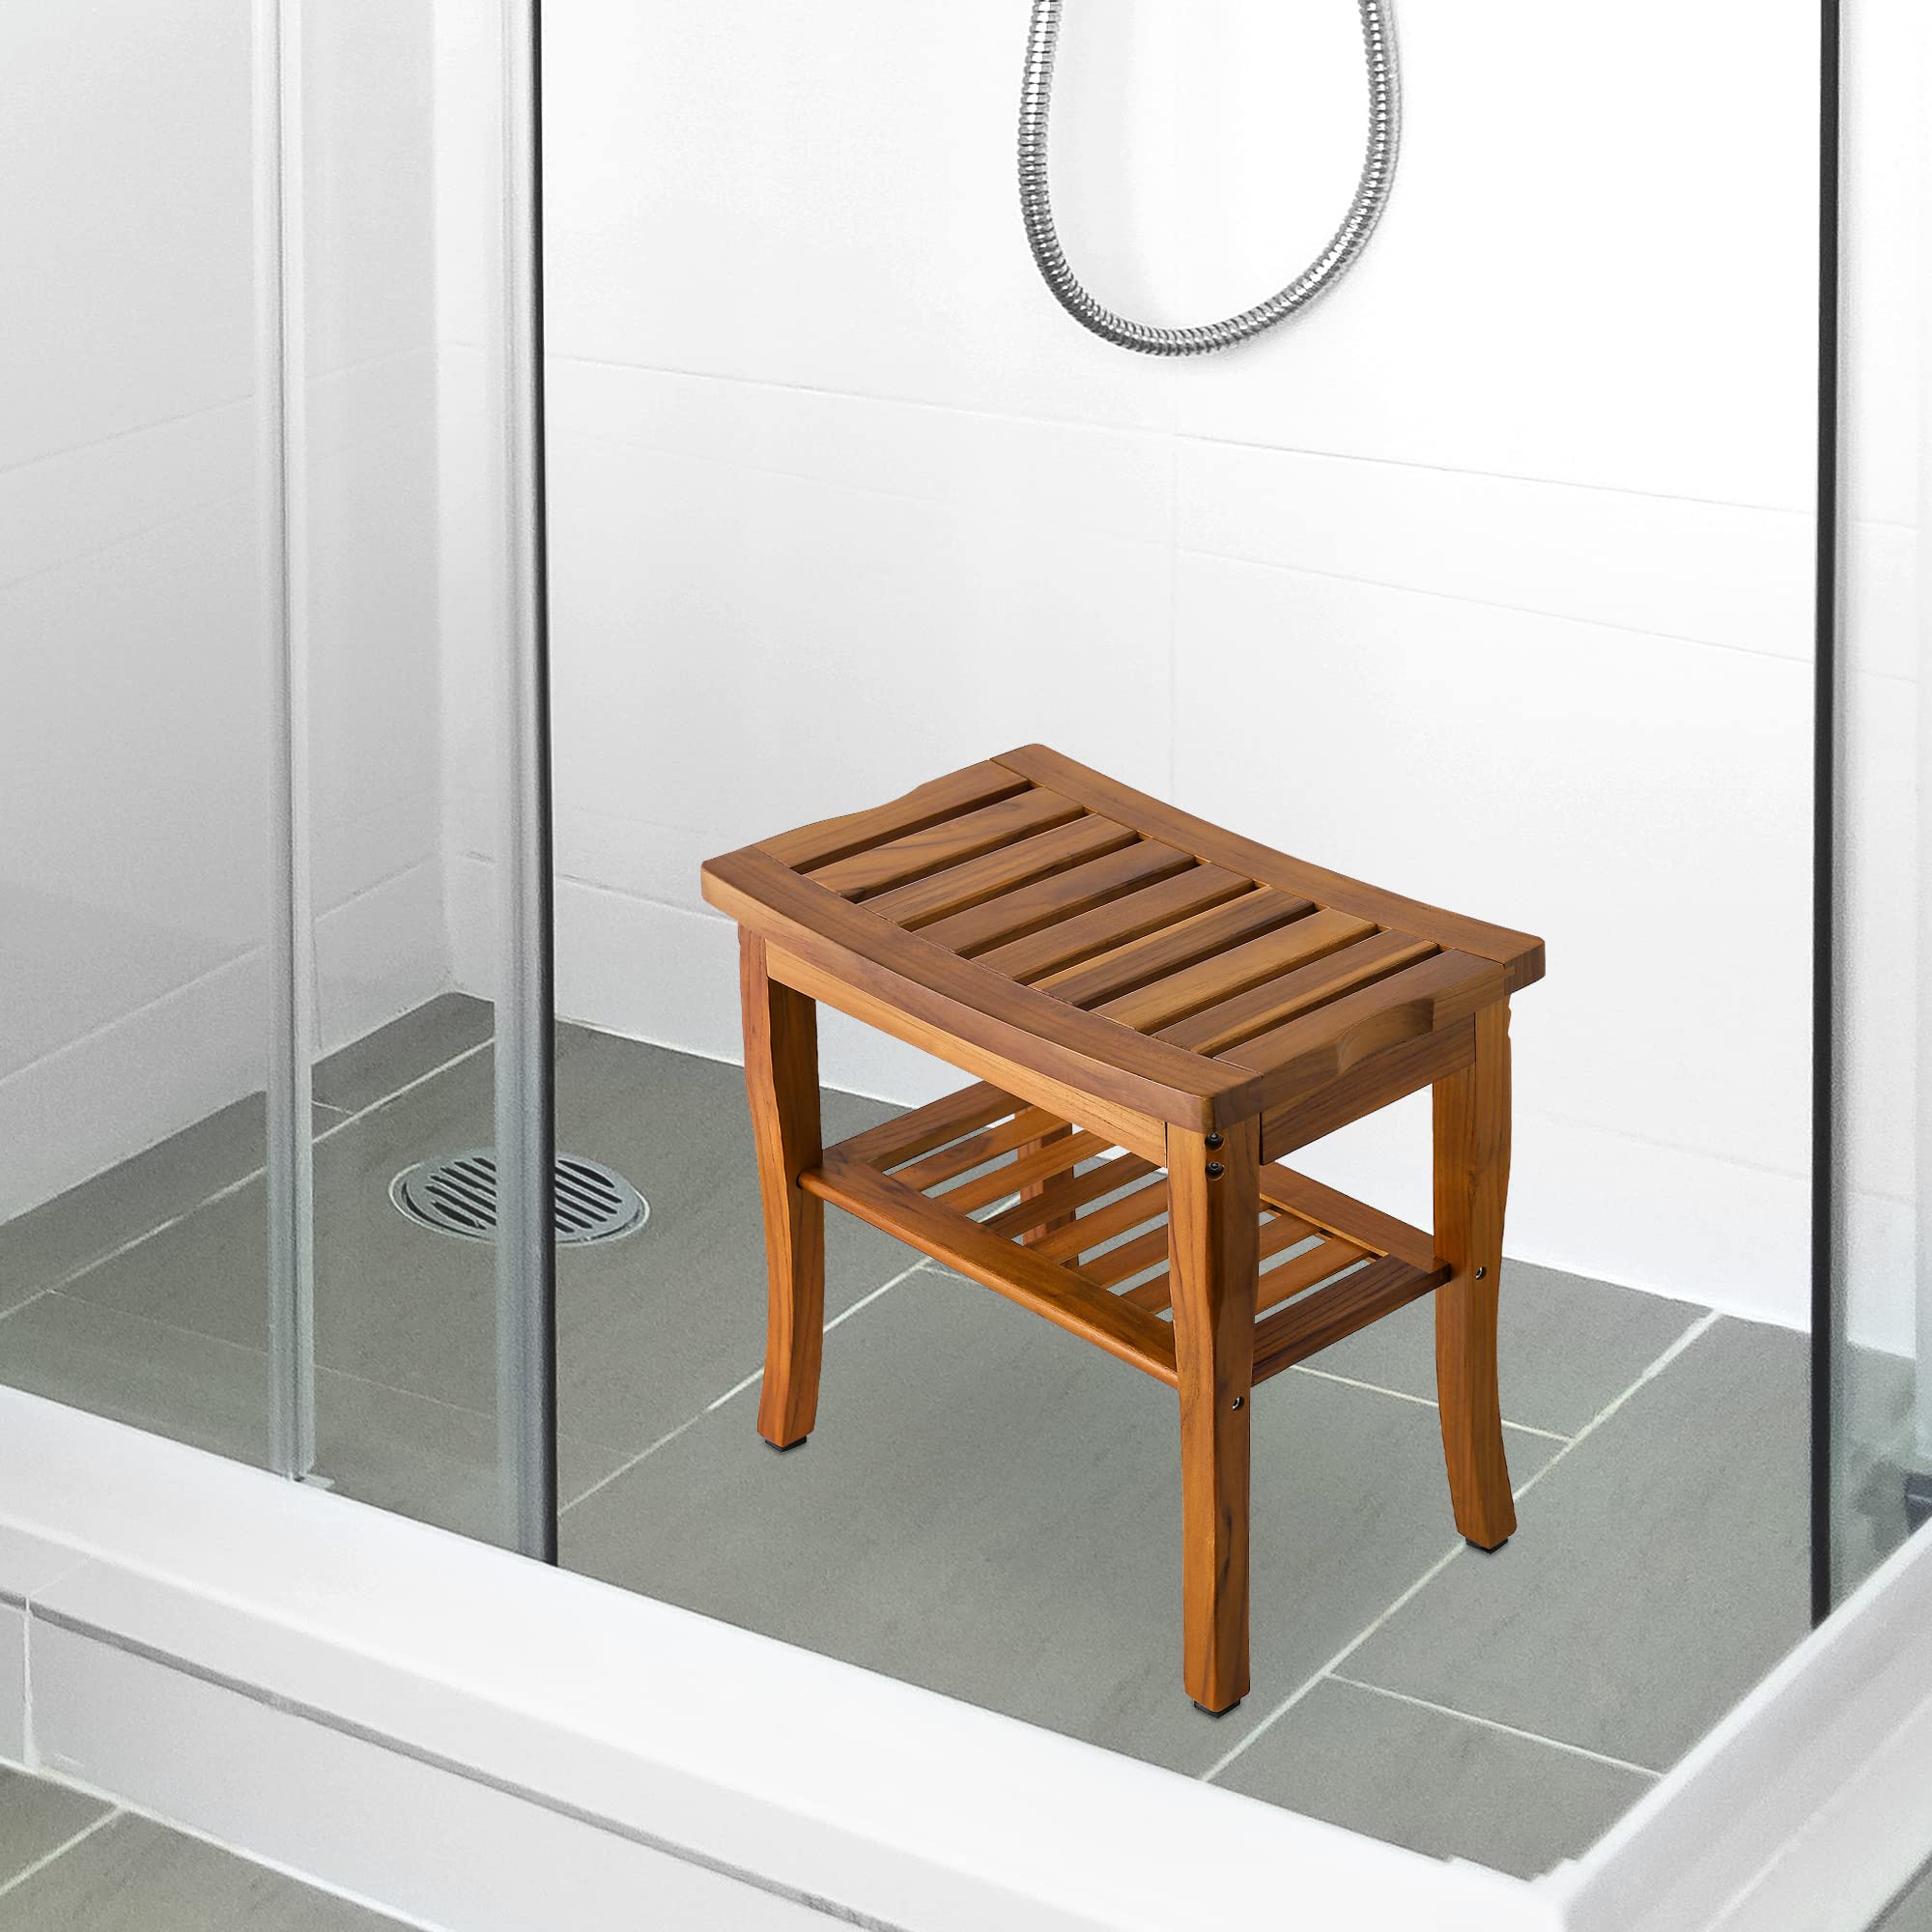 VaeFae Teak Shower Bench, Spa Bath Shower Stool with Storage Shelf, Wooden Seat Stool for Bathroom